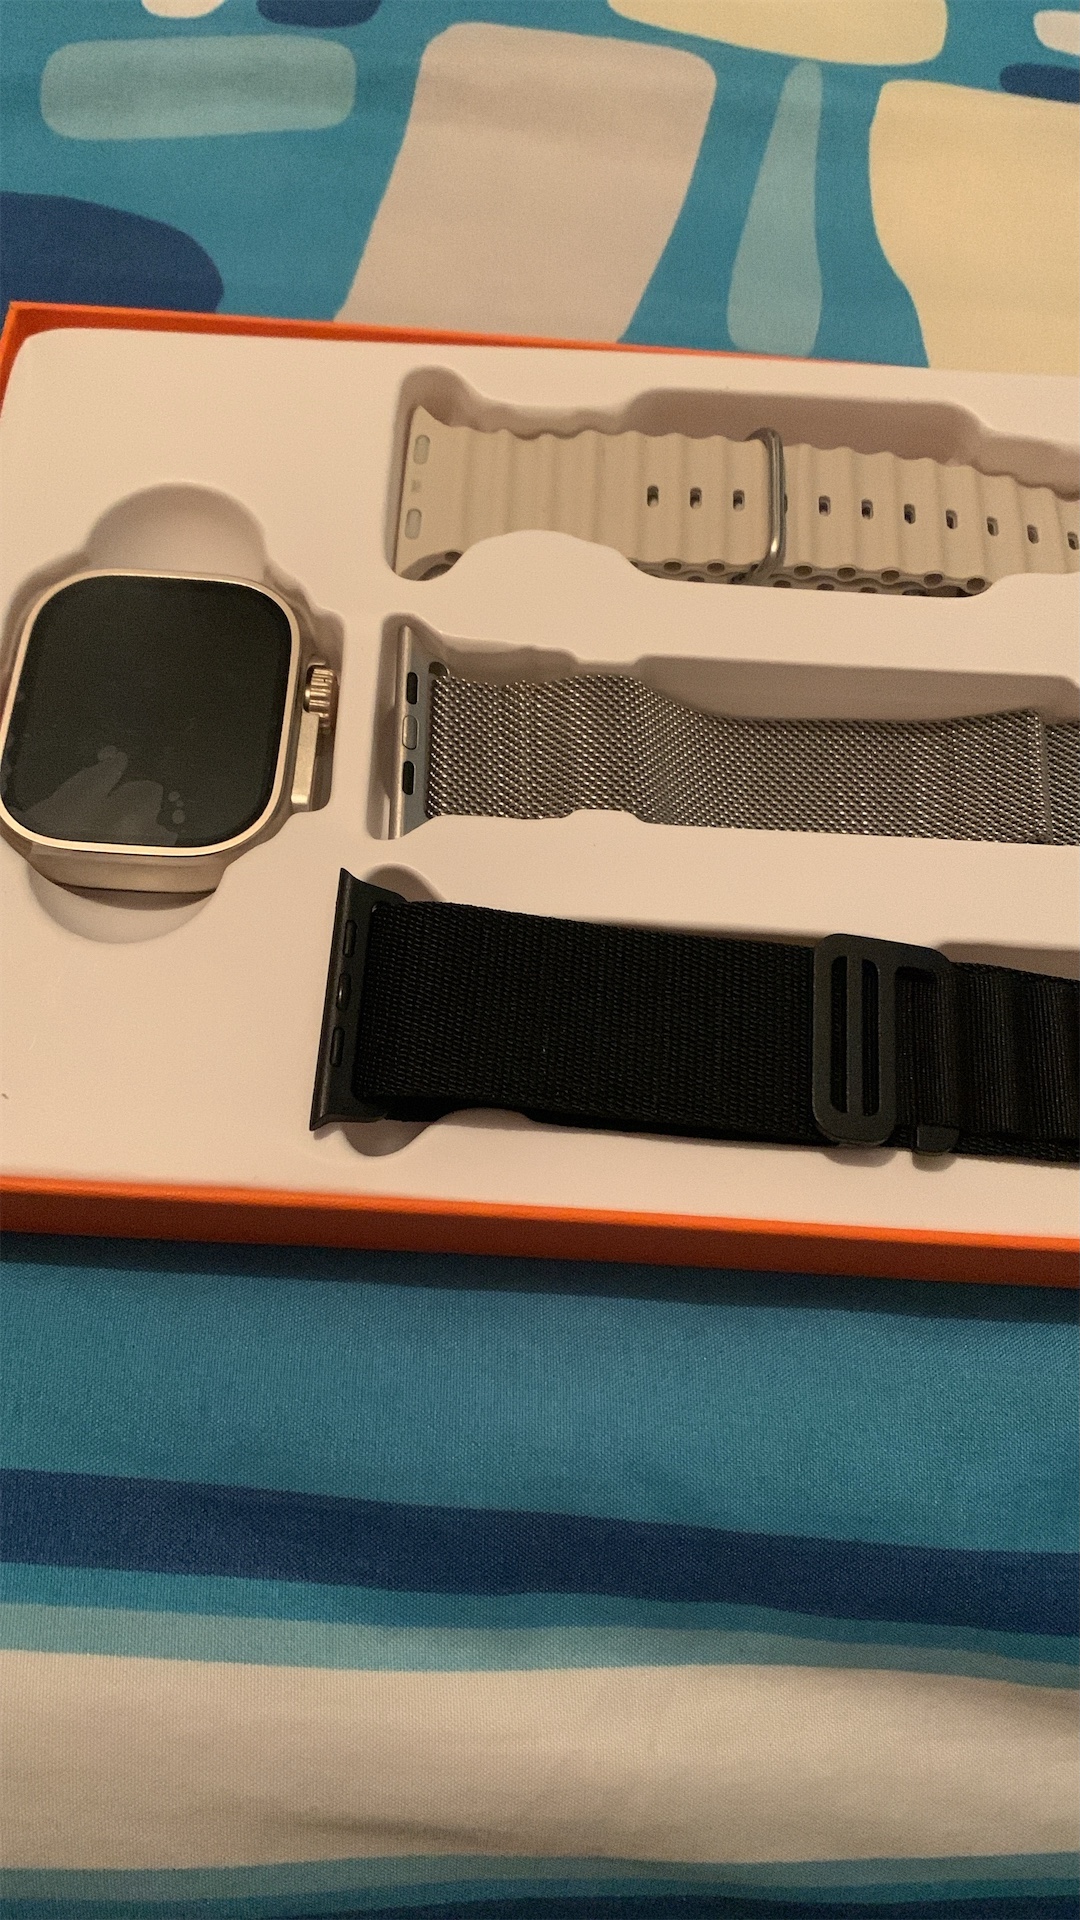 accesorios para electronica - Reloj inteligente s9 ultra smart Watch  0